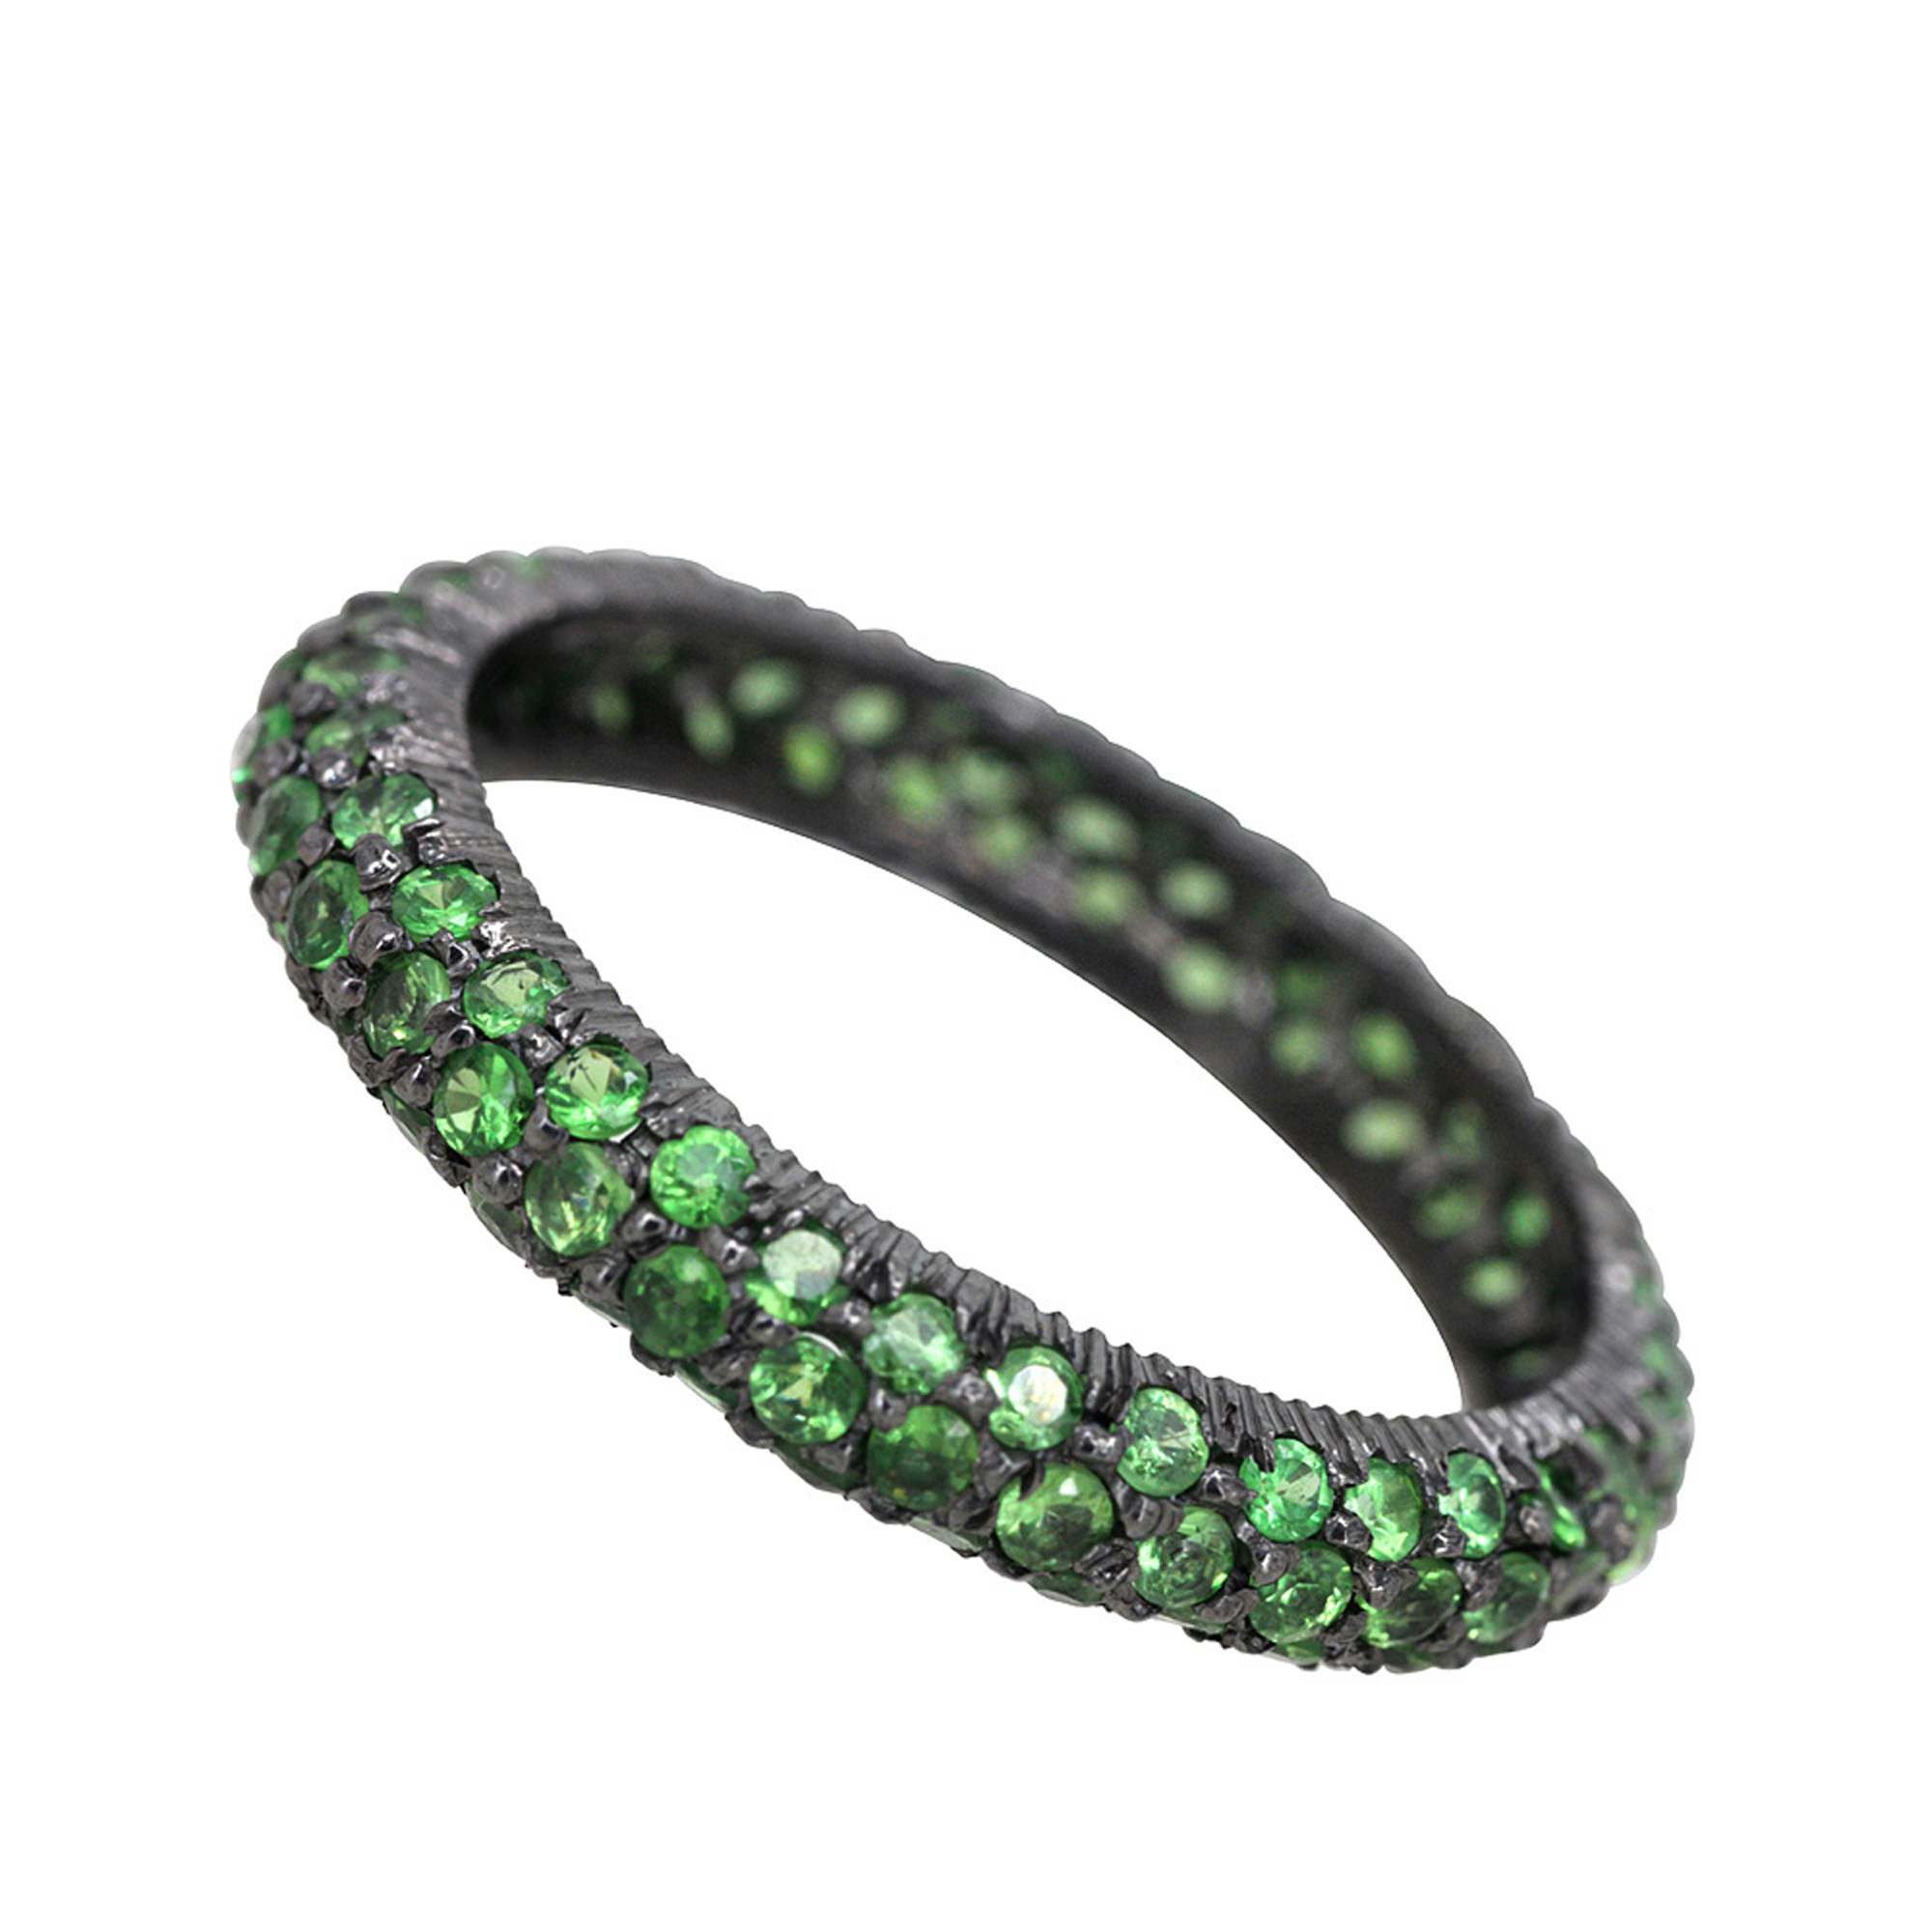 Gemstone t-savorite full eternity band ring, 925 silver jewelry